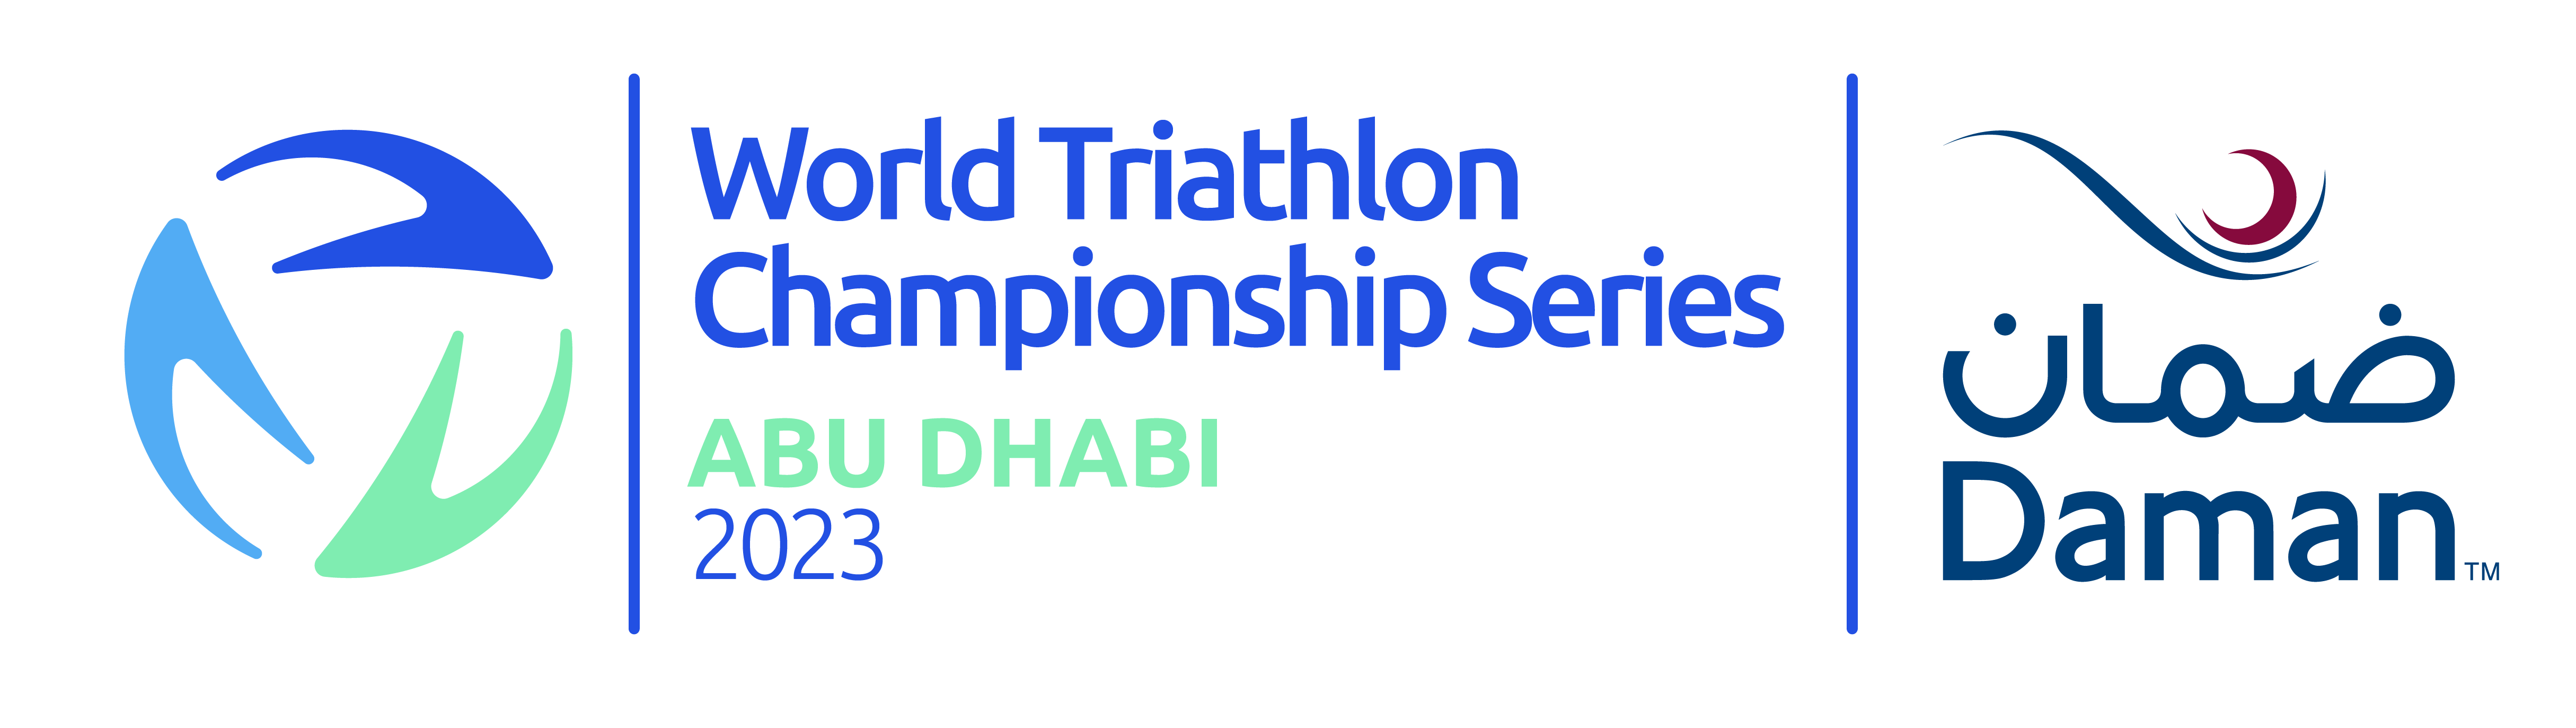 2023 World Triathlon Championship Series Abu Dhabi logo